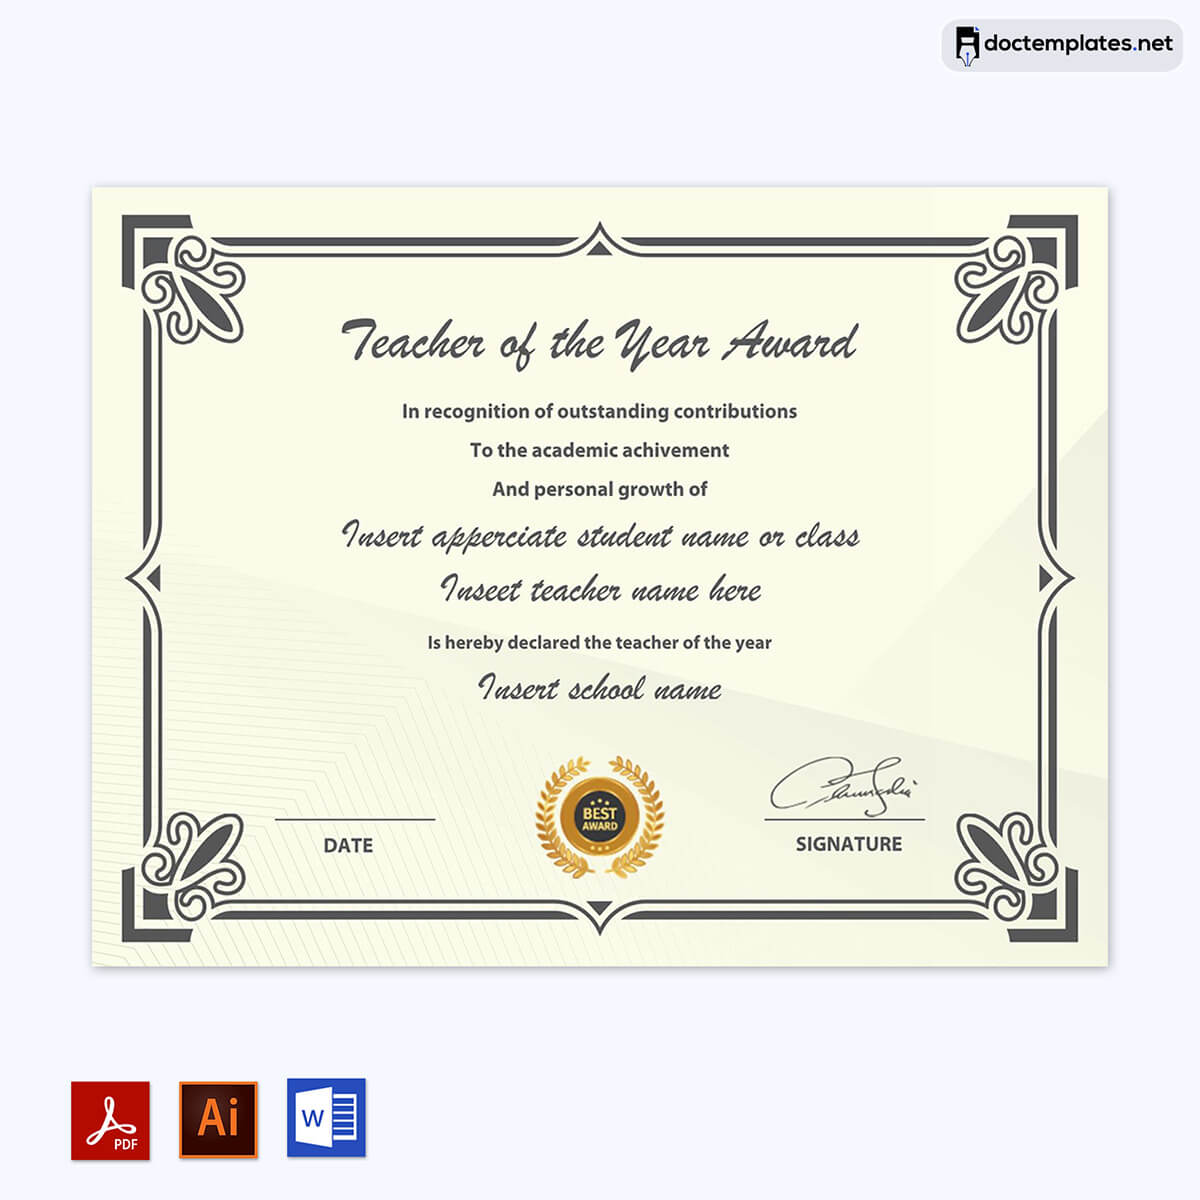 
teachers day certificate of appreciation template